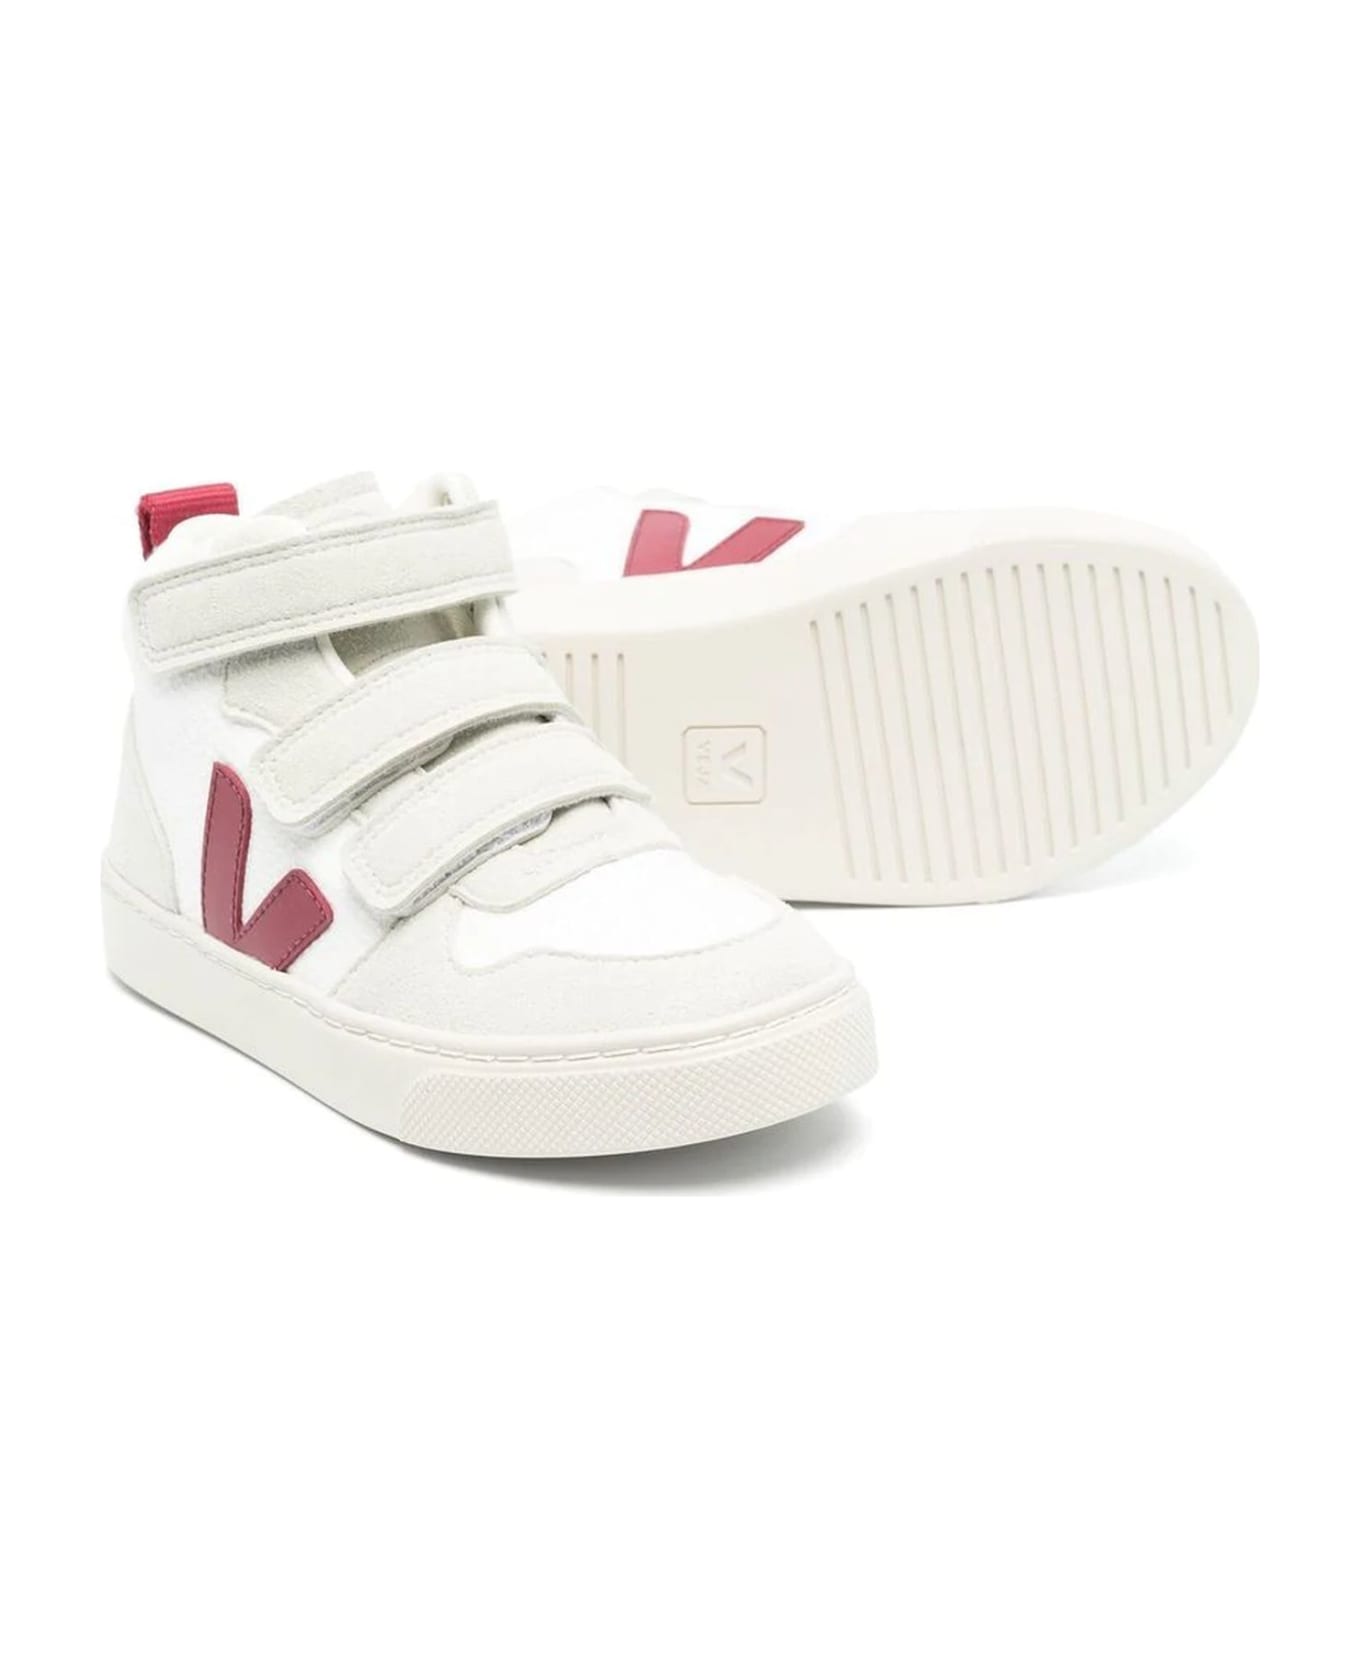 Veja White Fabric Sneakers - Bianco+bordo